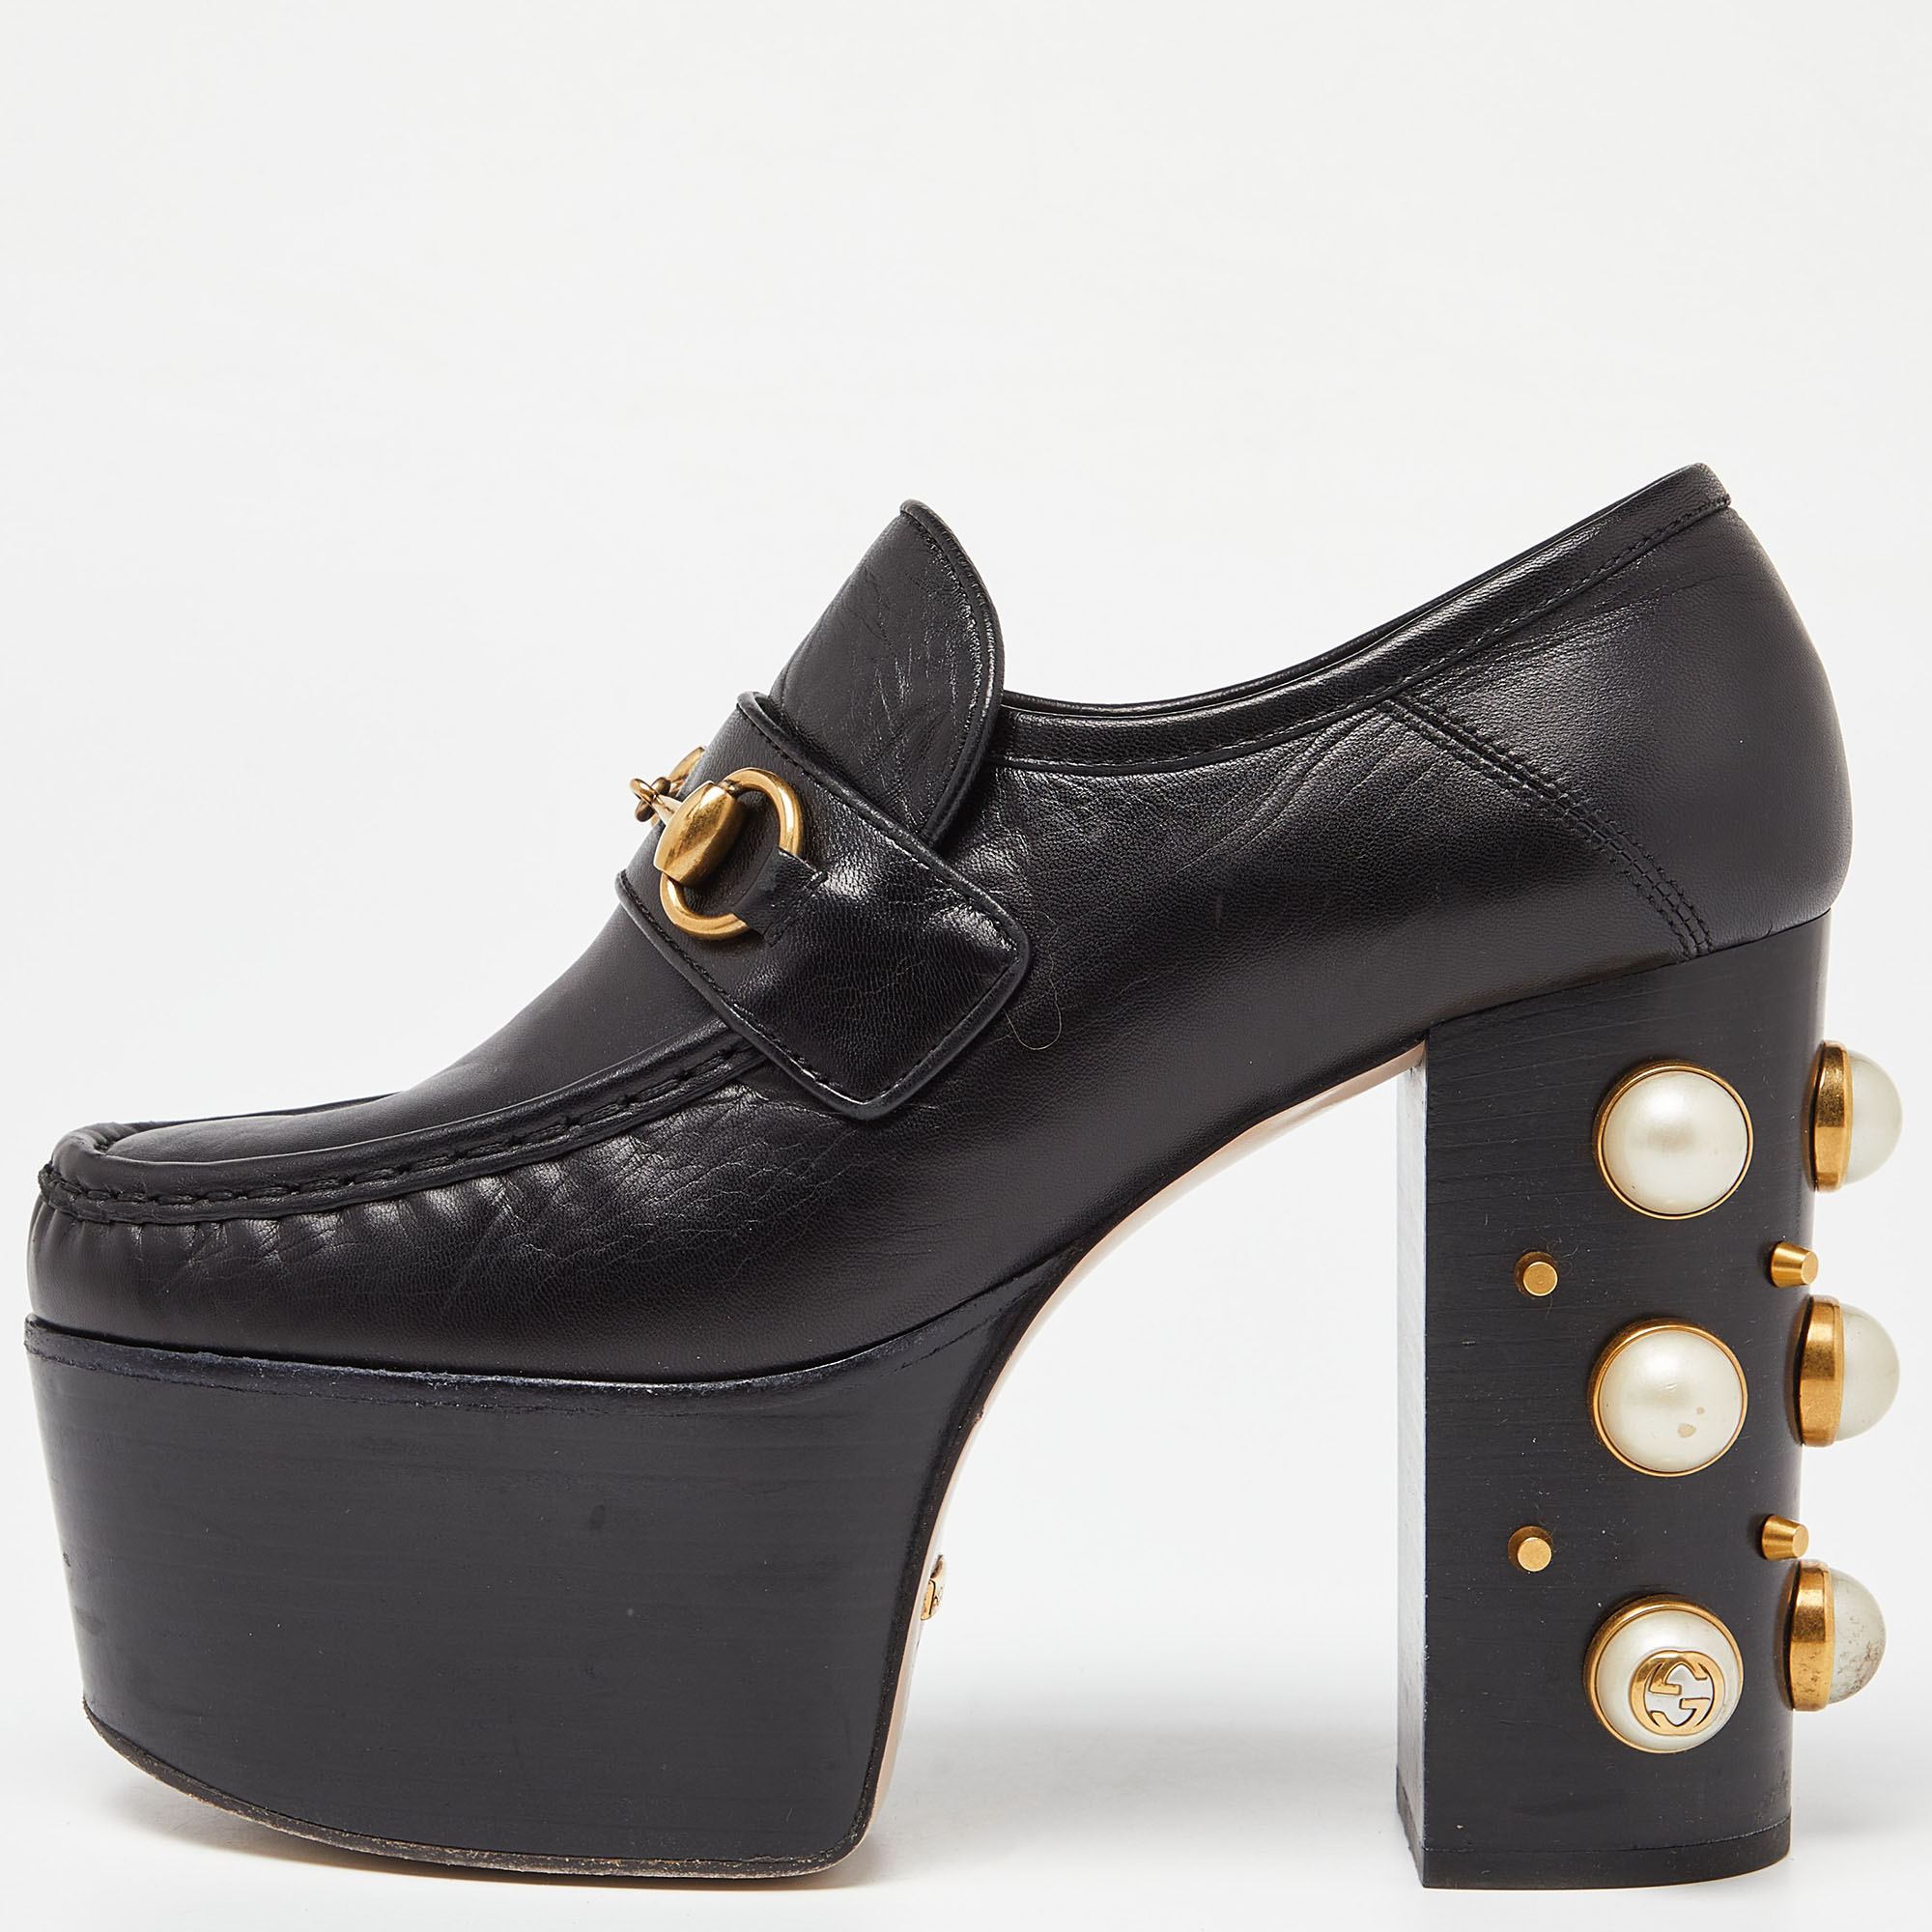 Gucci black leather pearl studded vegas platform loafers size 37.5